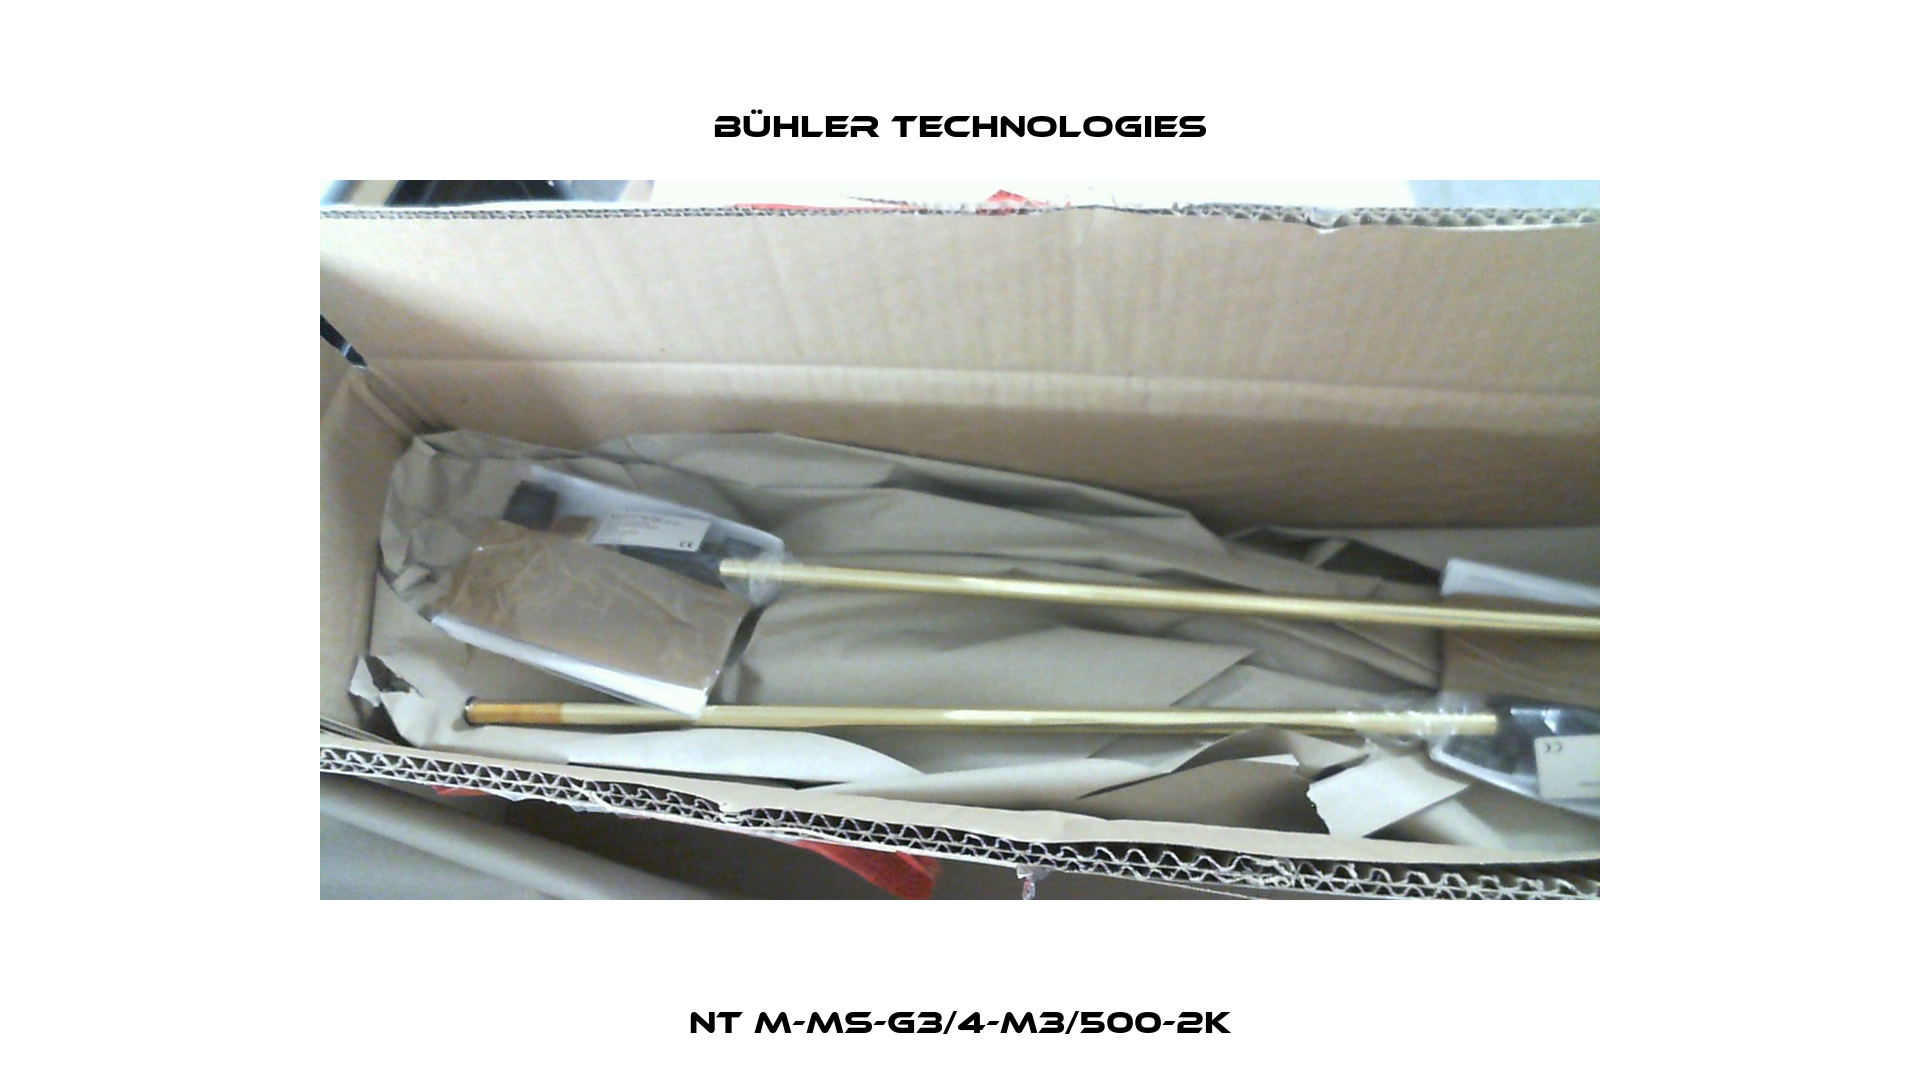 NT M-MS-G3/4-M3/500-2K Bühler Technologies